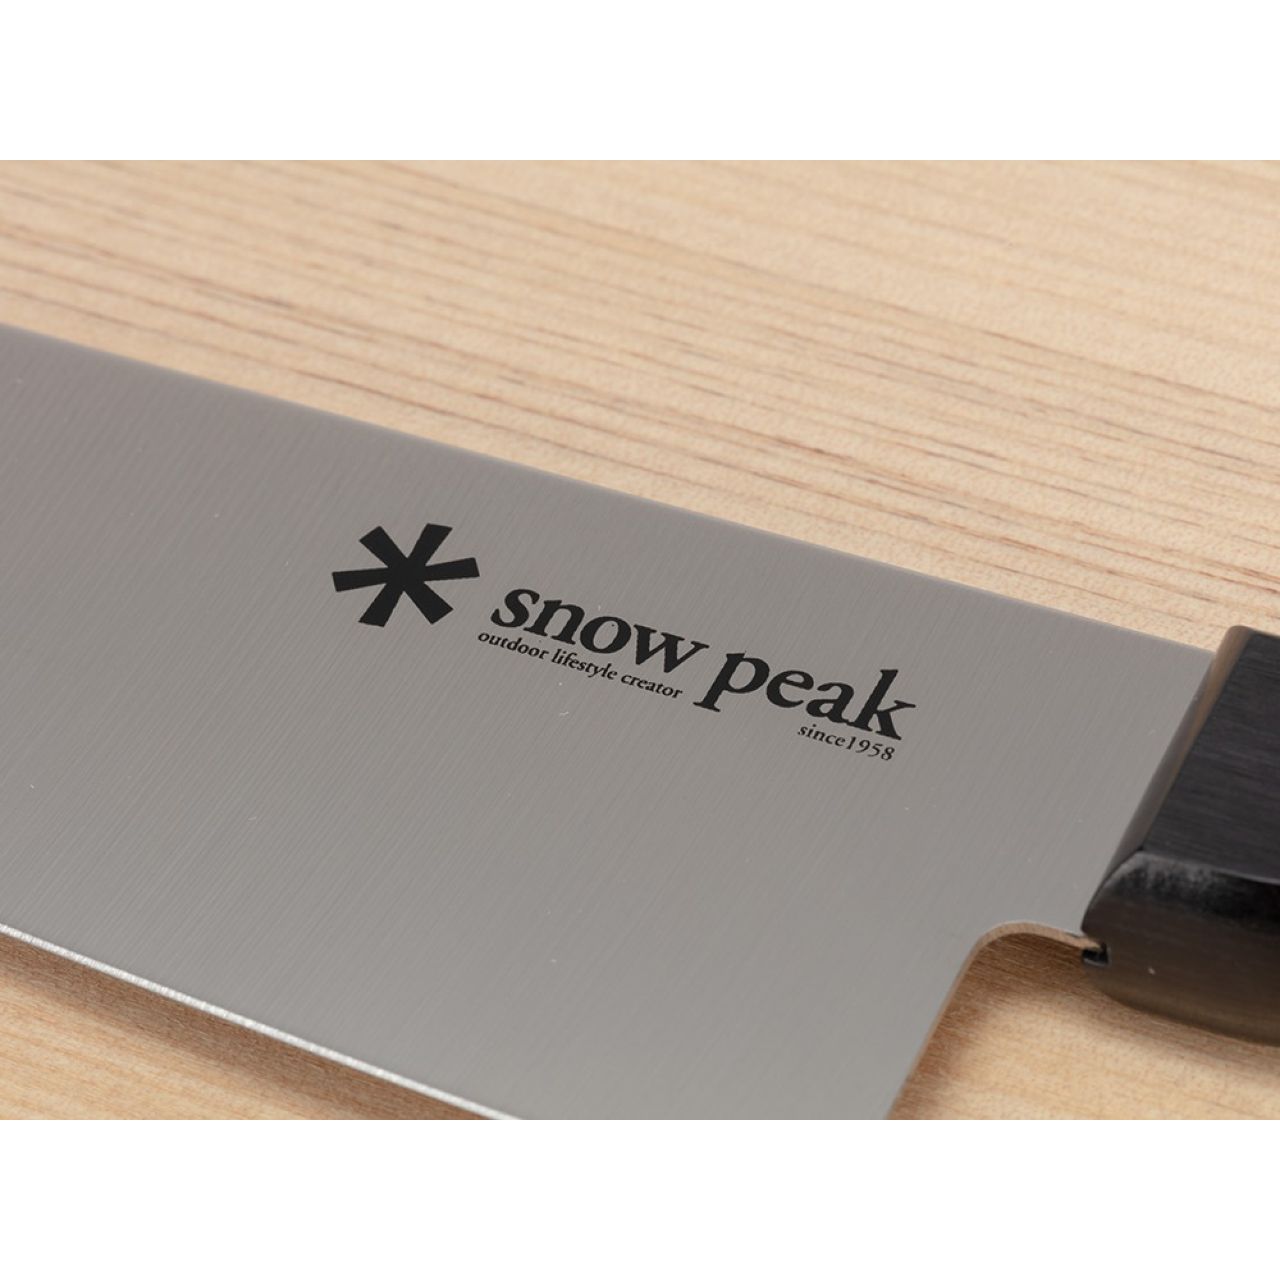 Snow Peak Cutting Board Set